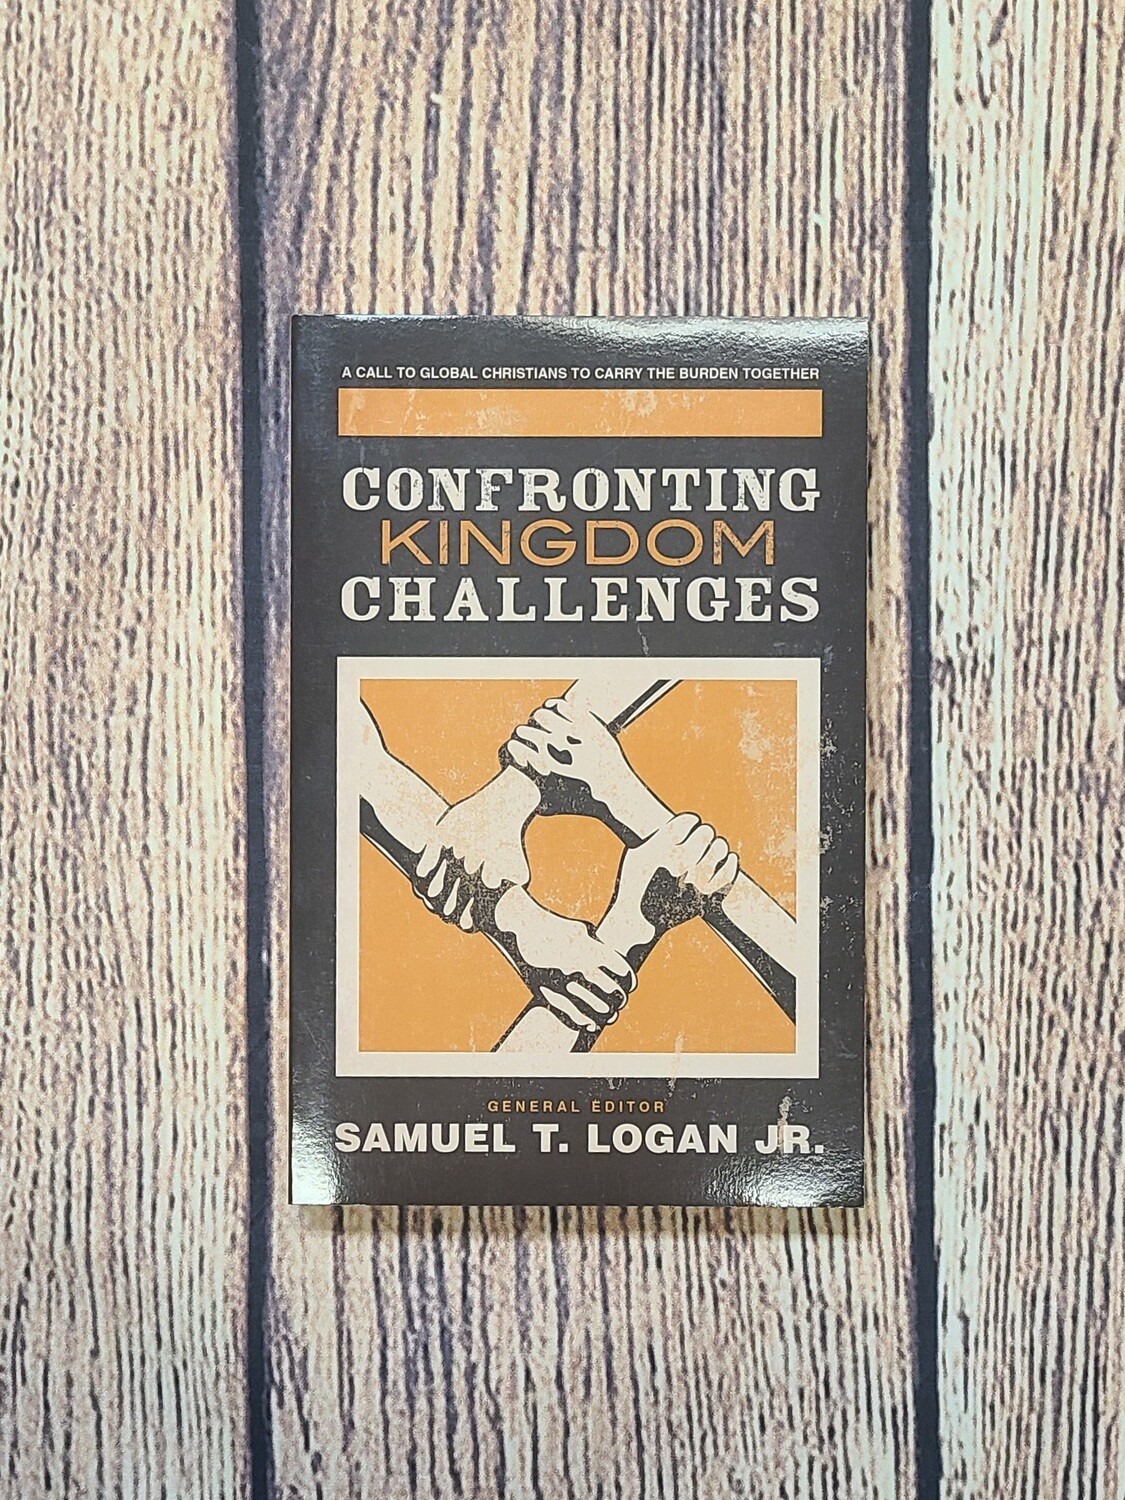 Confronting Kingdom Challenges by Samuel T. Logan Jr.